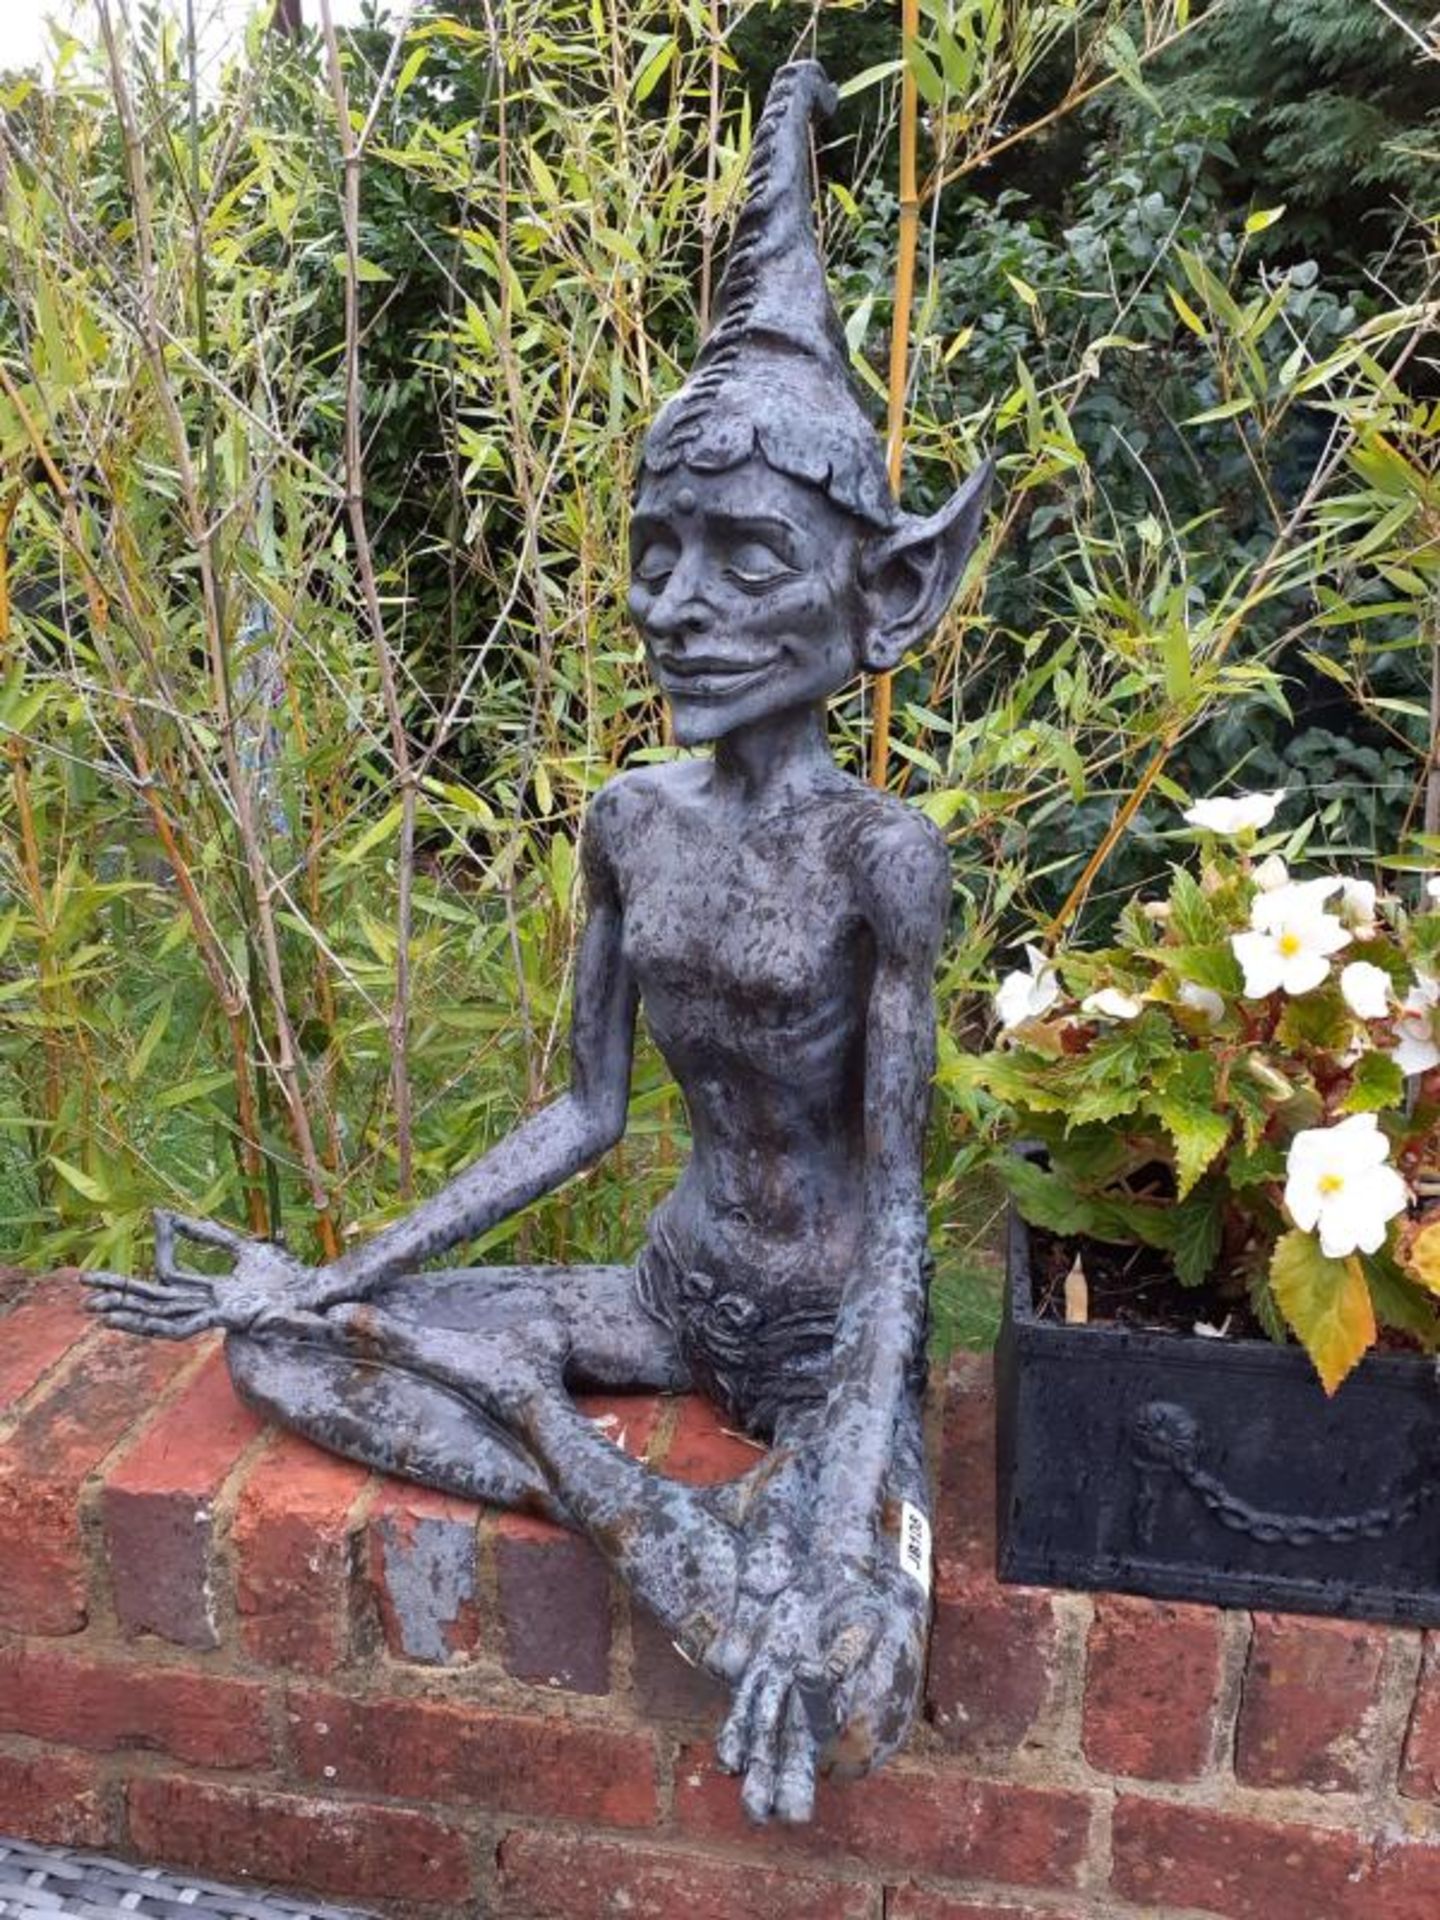 1 x Bronze / Metal Meditating Yoga Goblin / Elf / Pixie Garden Statue - Dimensions: H75cm x d 45cm x